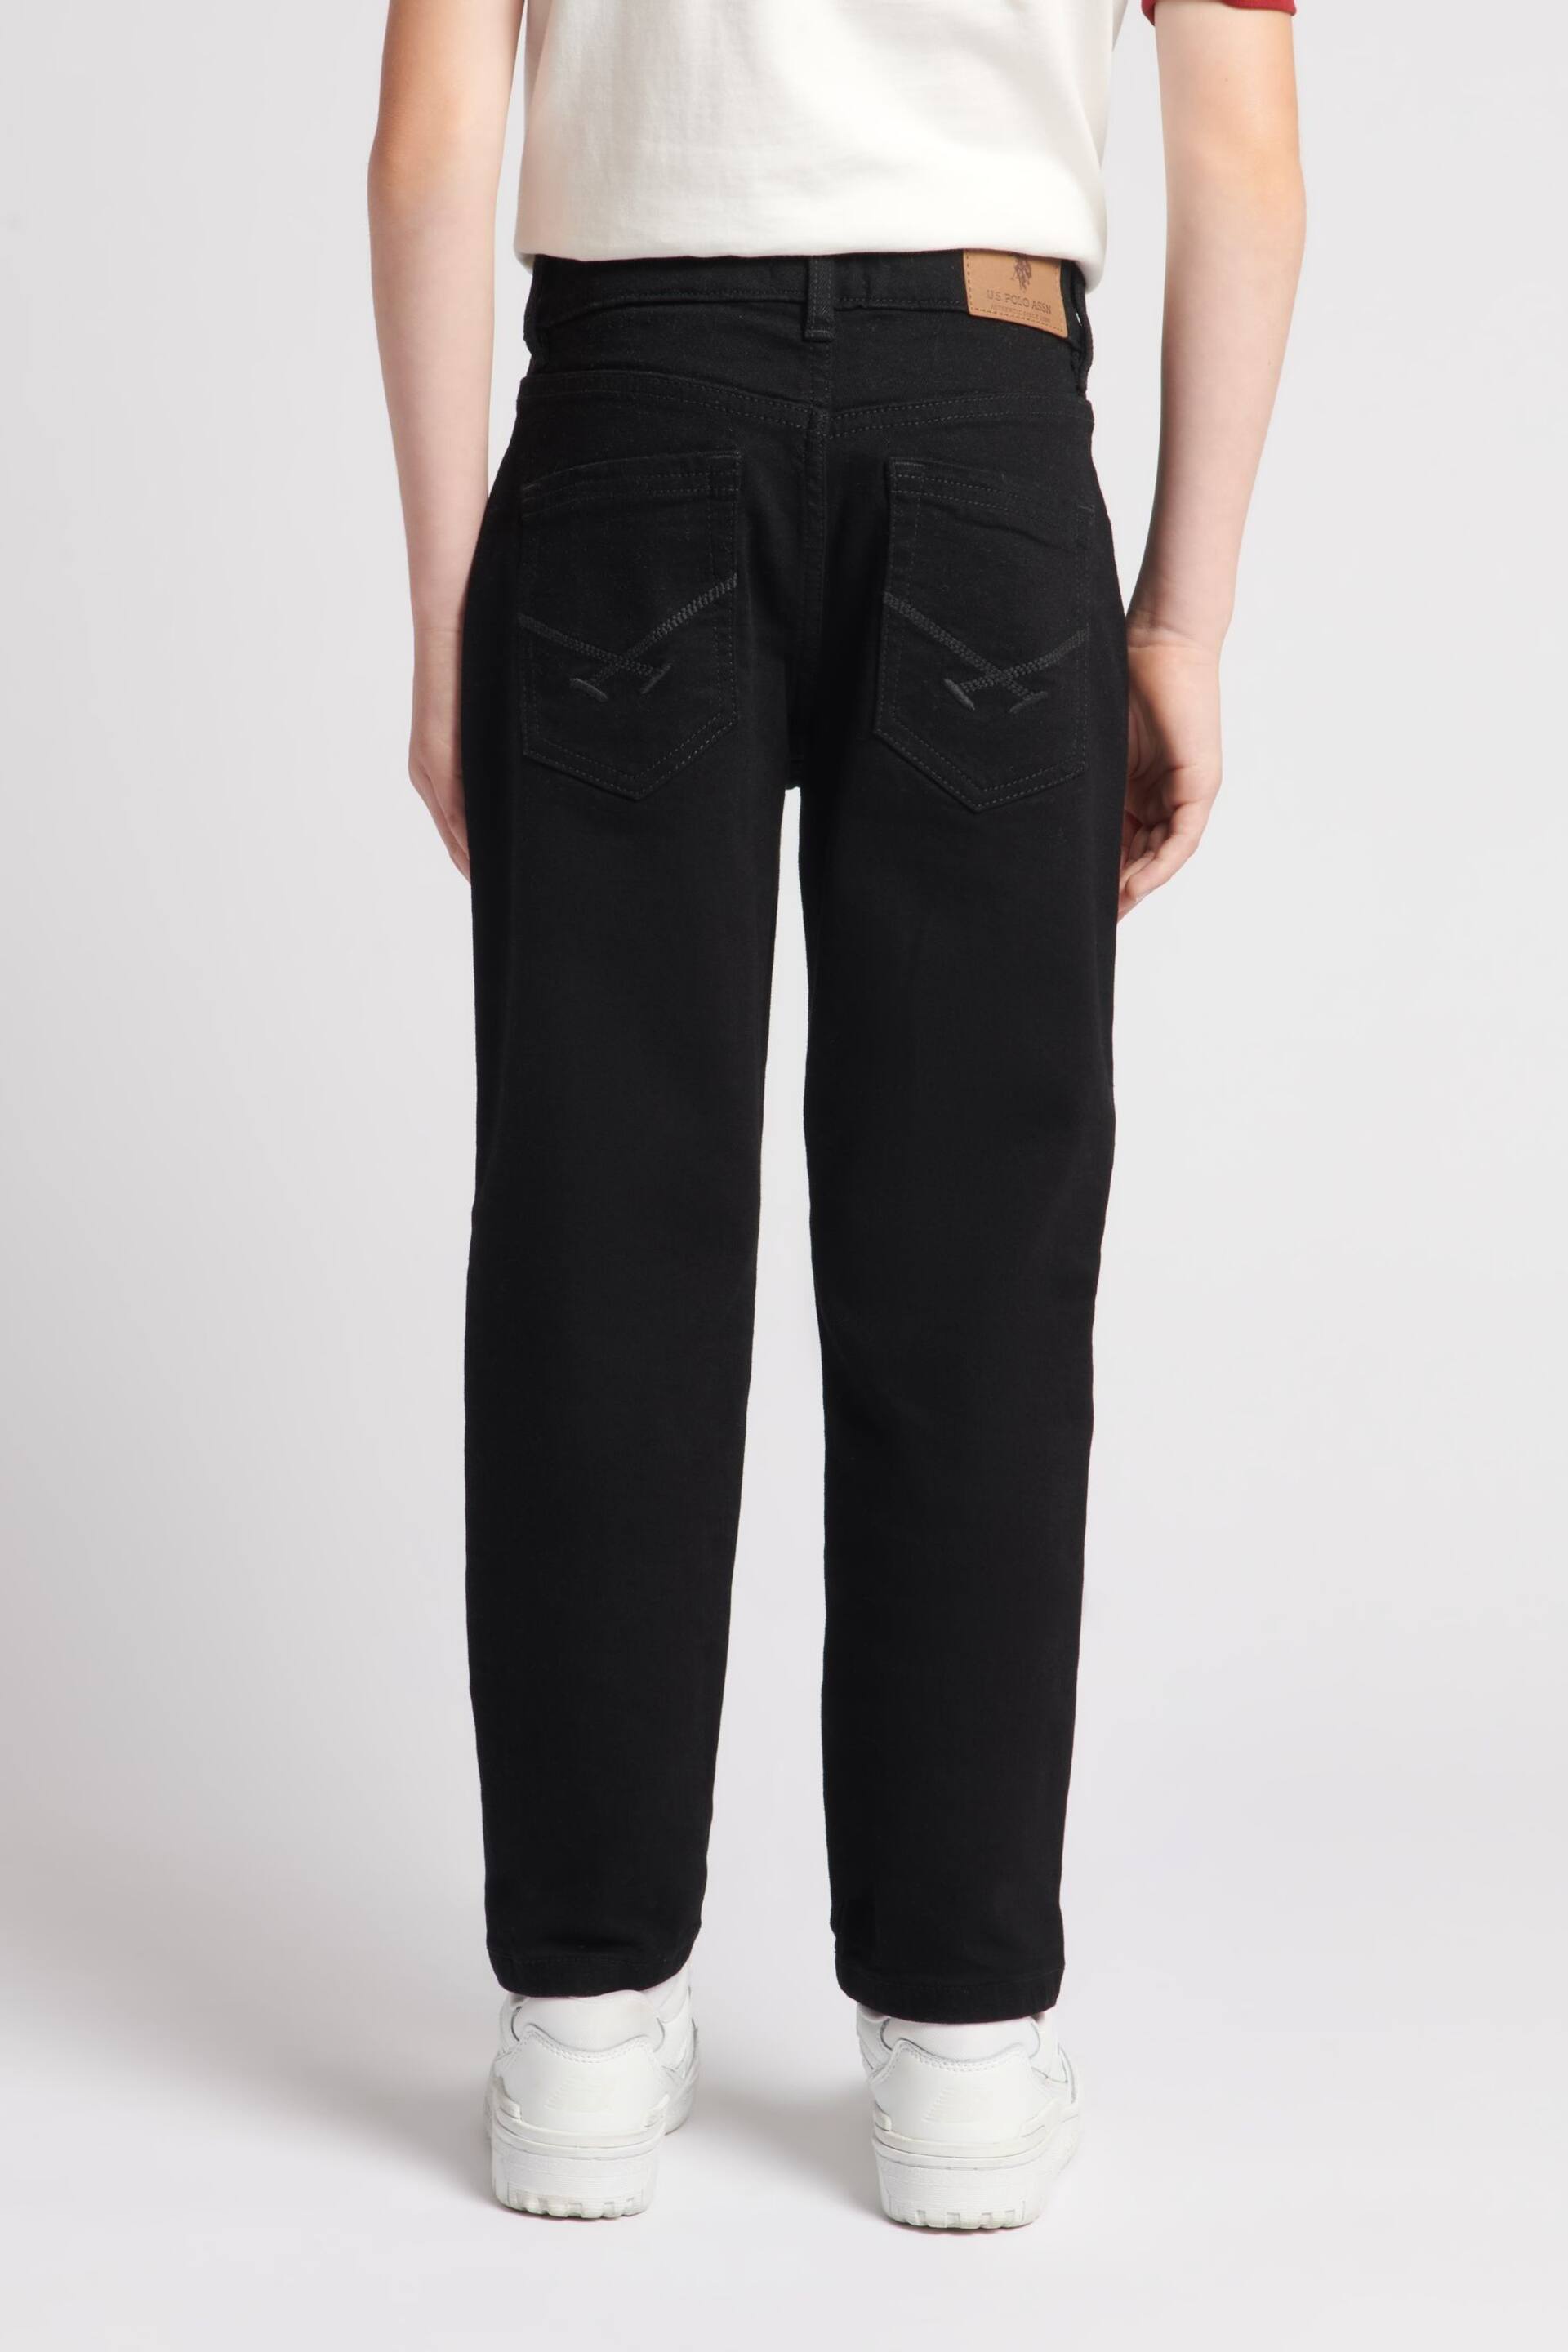 U.S. Polo Assn. Boys 5 Pocket Slim Fit Denim Black Jeans - Image 2 of 7